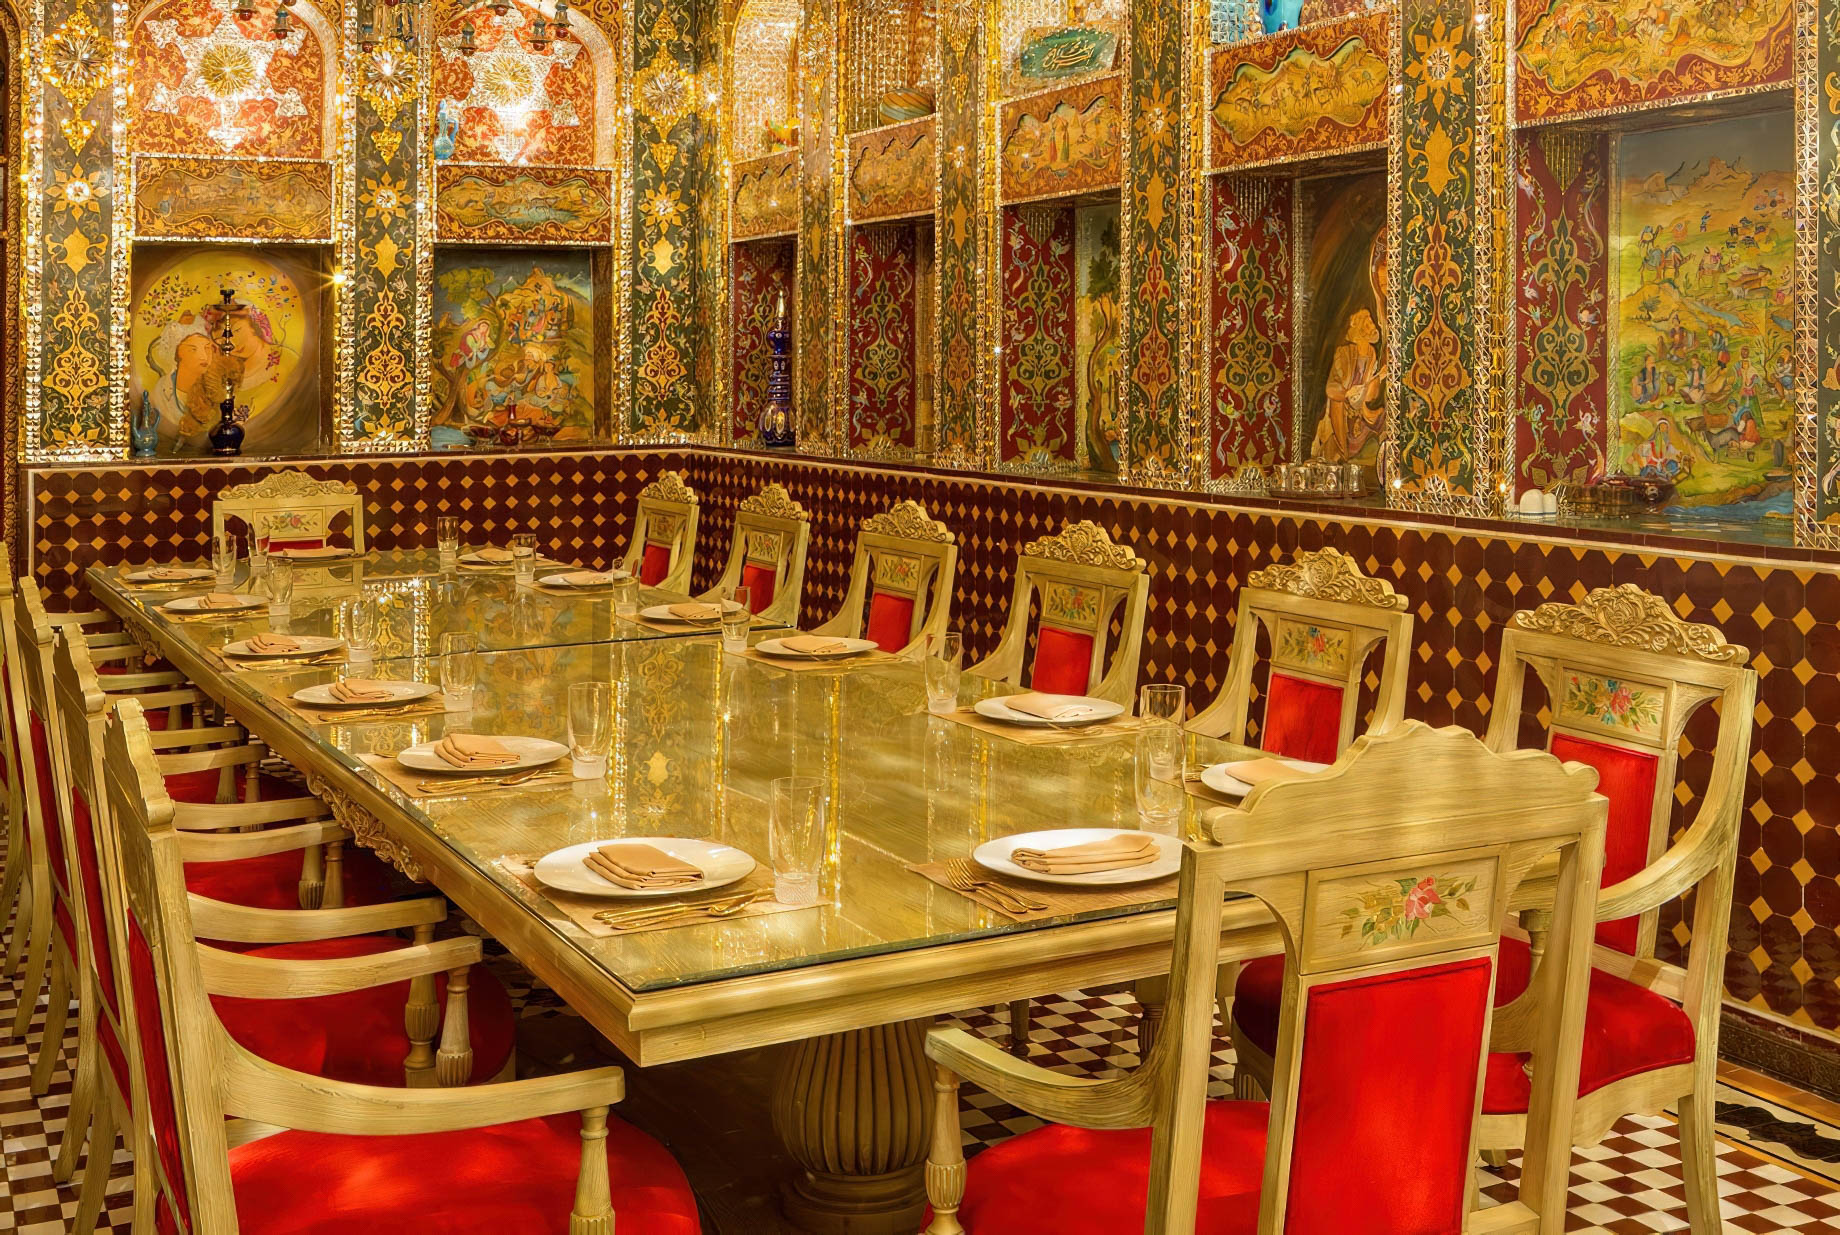 Sharq Village & Spa, A Ritz-Carlton Hotel - Doha, Qatar - At Parisa Souq Waqif Restaurant Dining Table